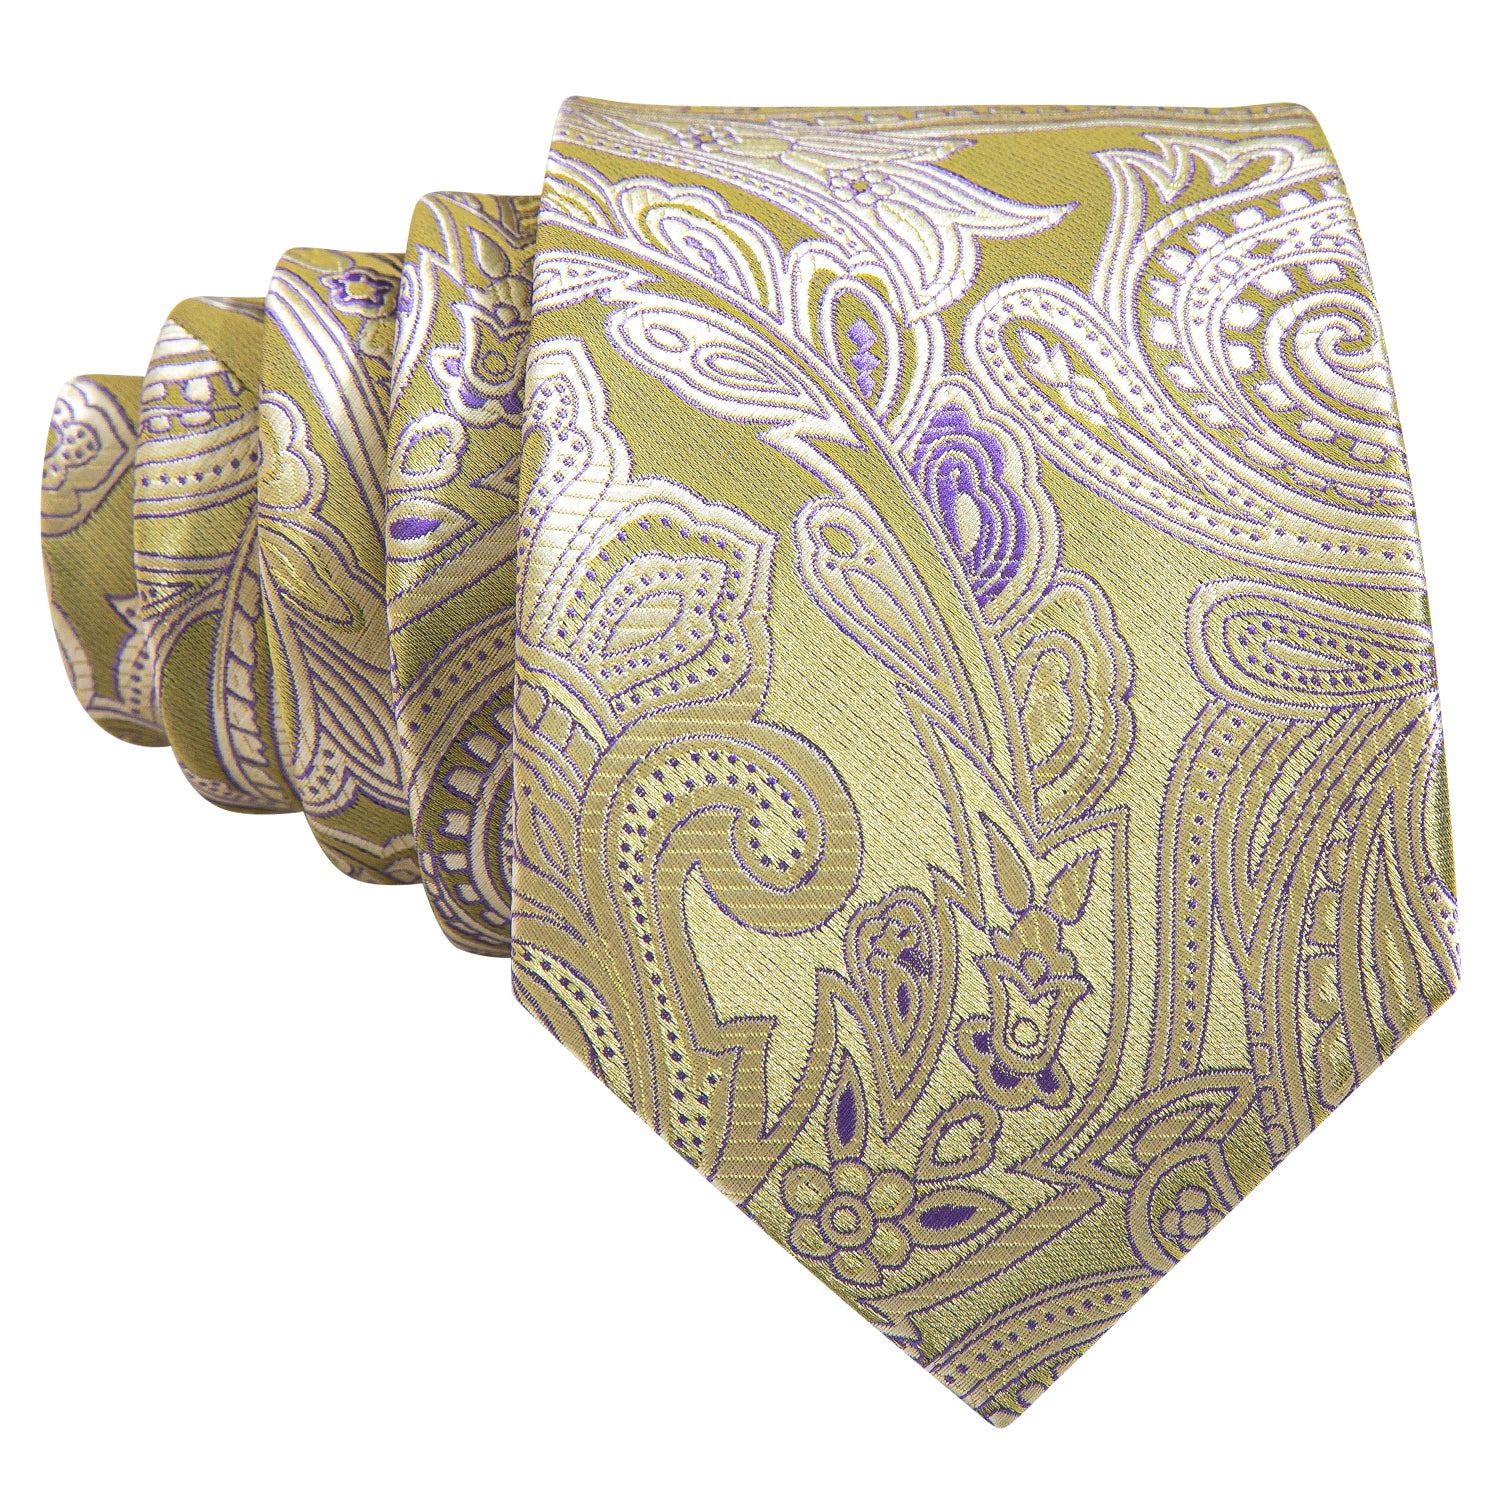 light grey tie lingt yellow tie with grey and purple paisley 